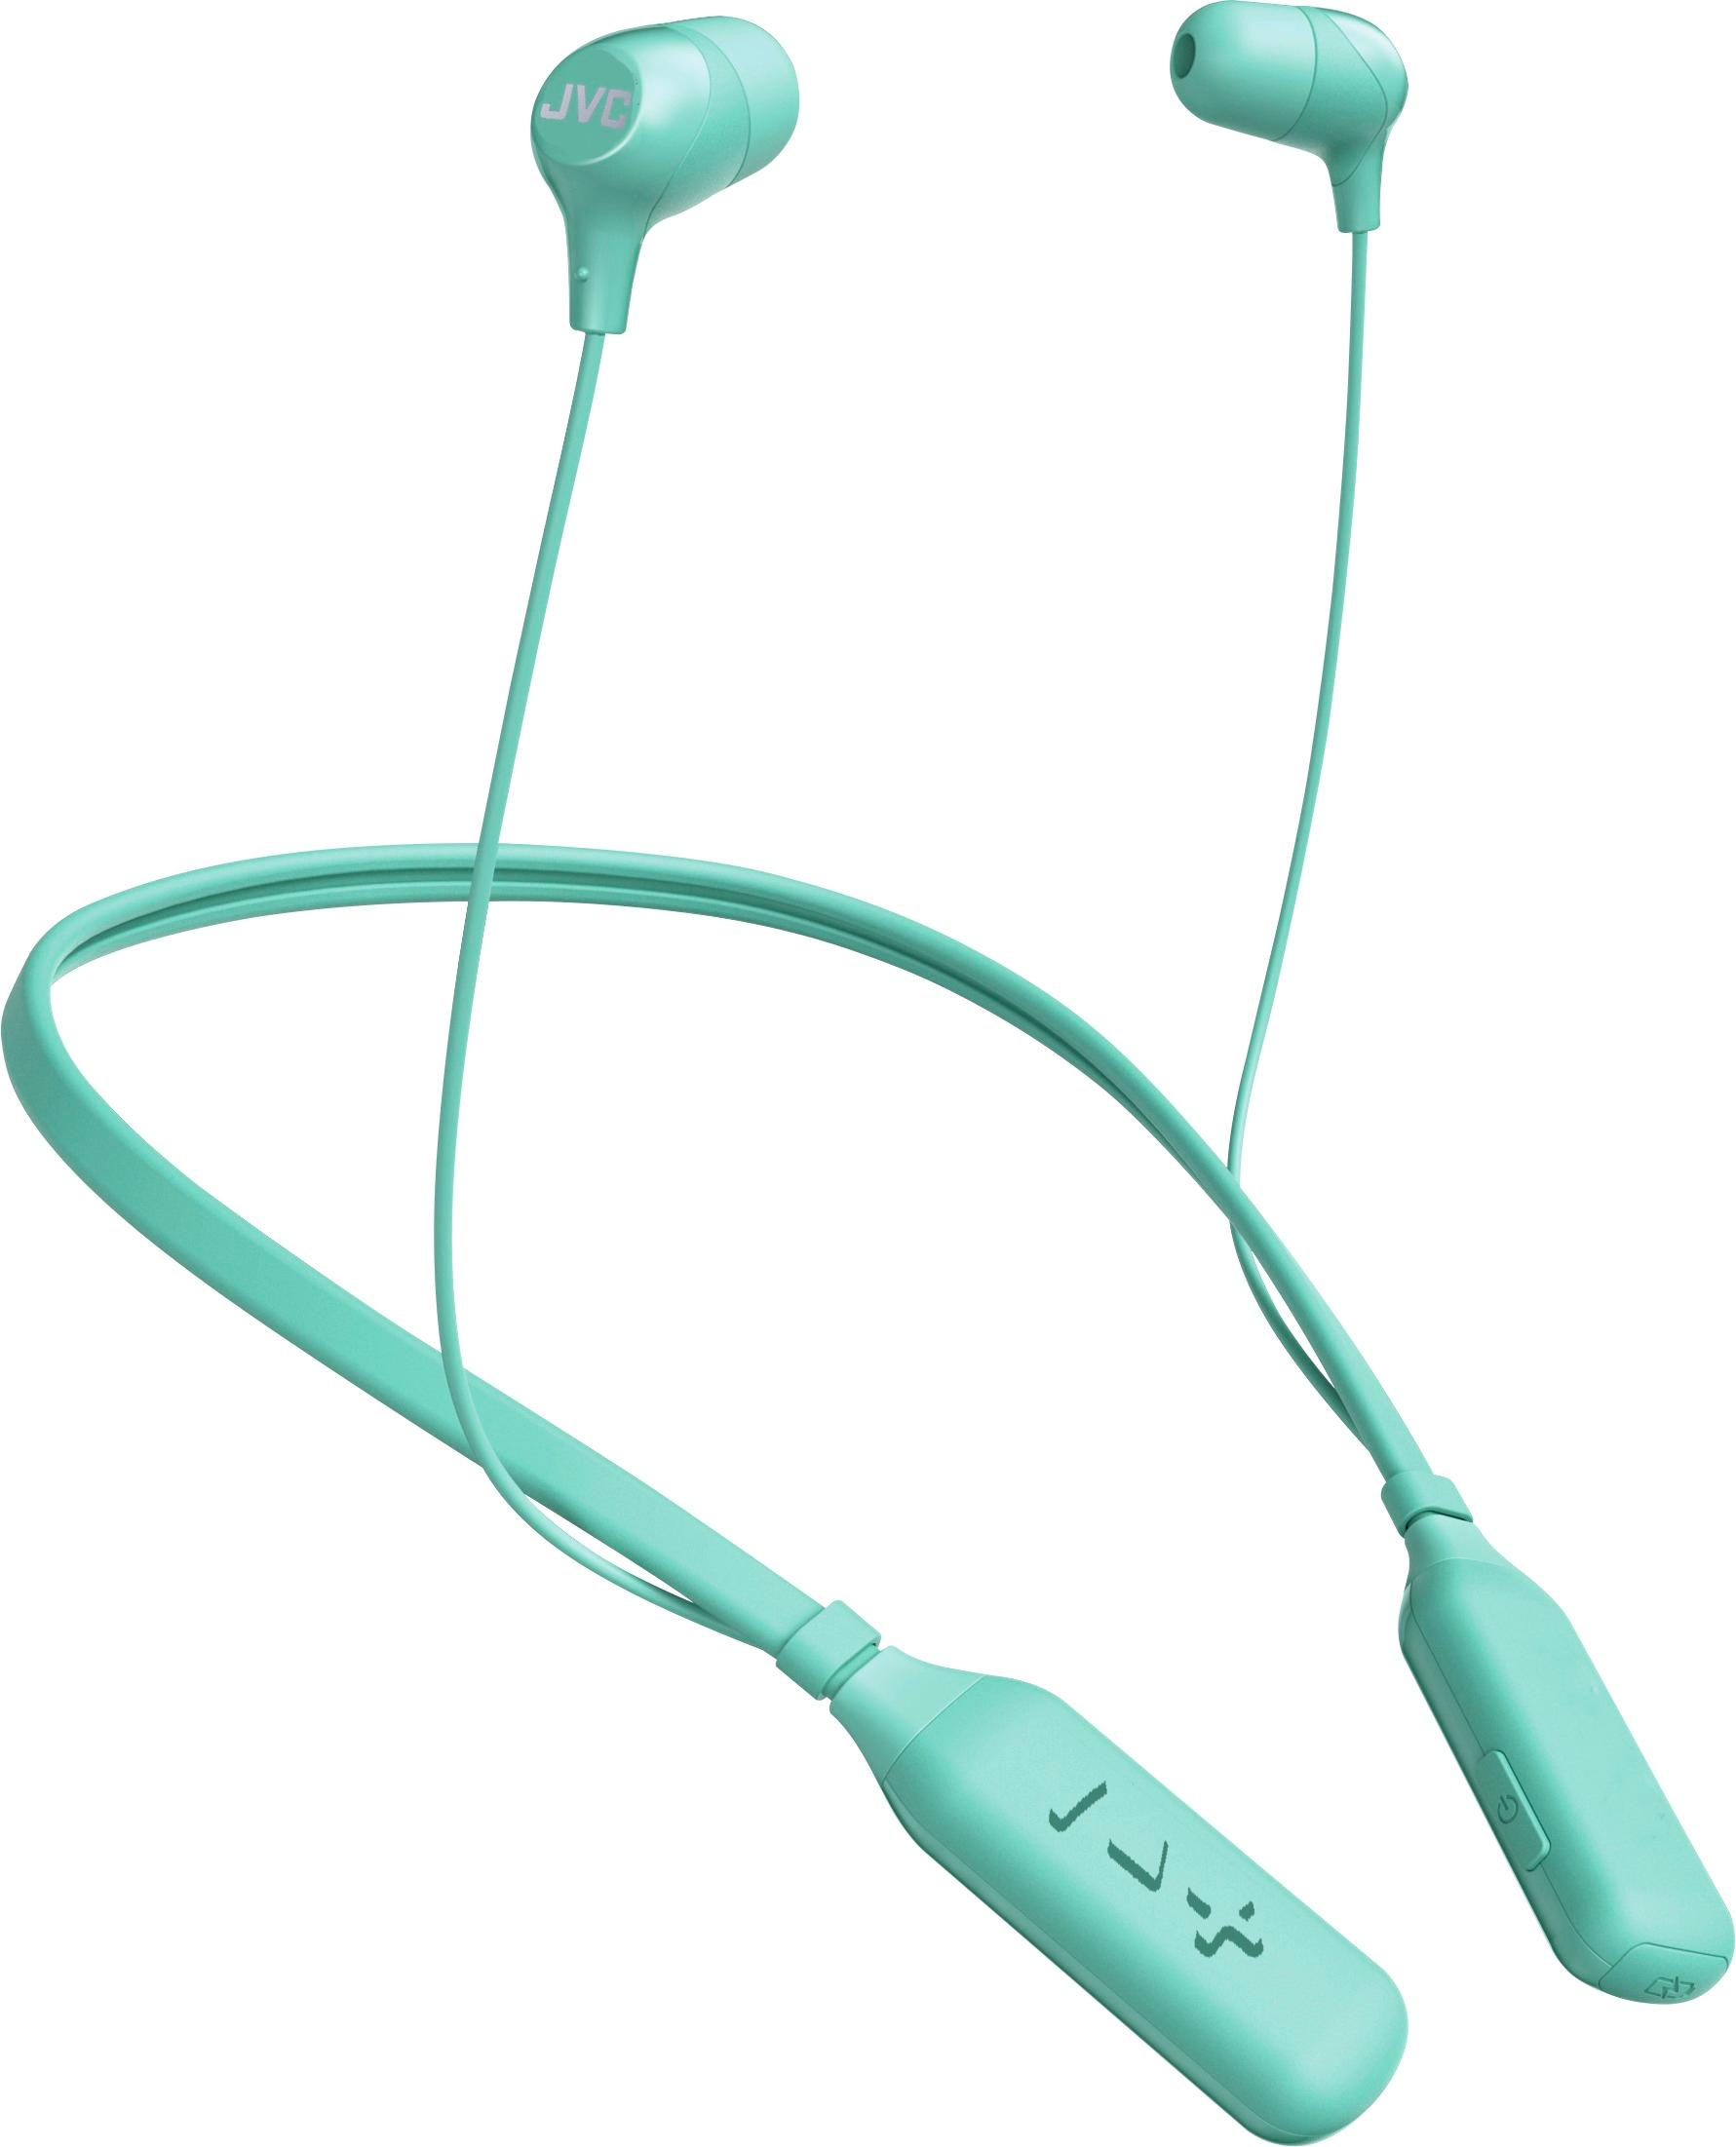 Angle View: JVC - HA FX39BT Marshmallow Wireless In-Ear Headphones - Green